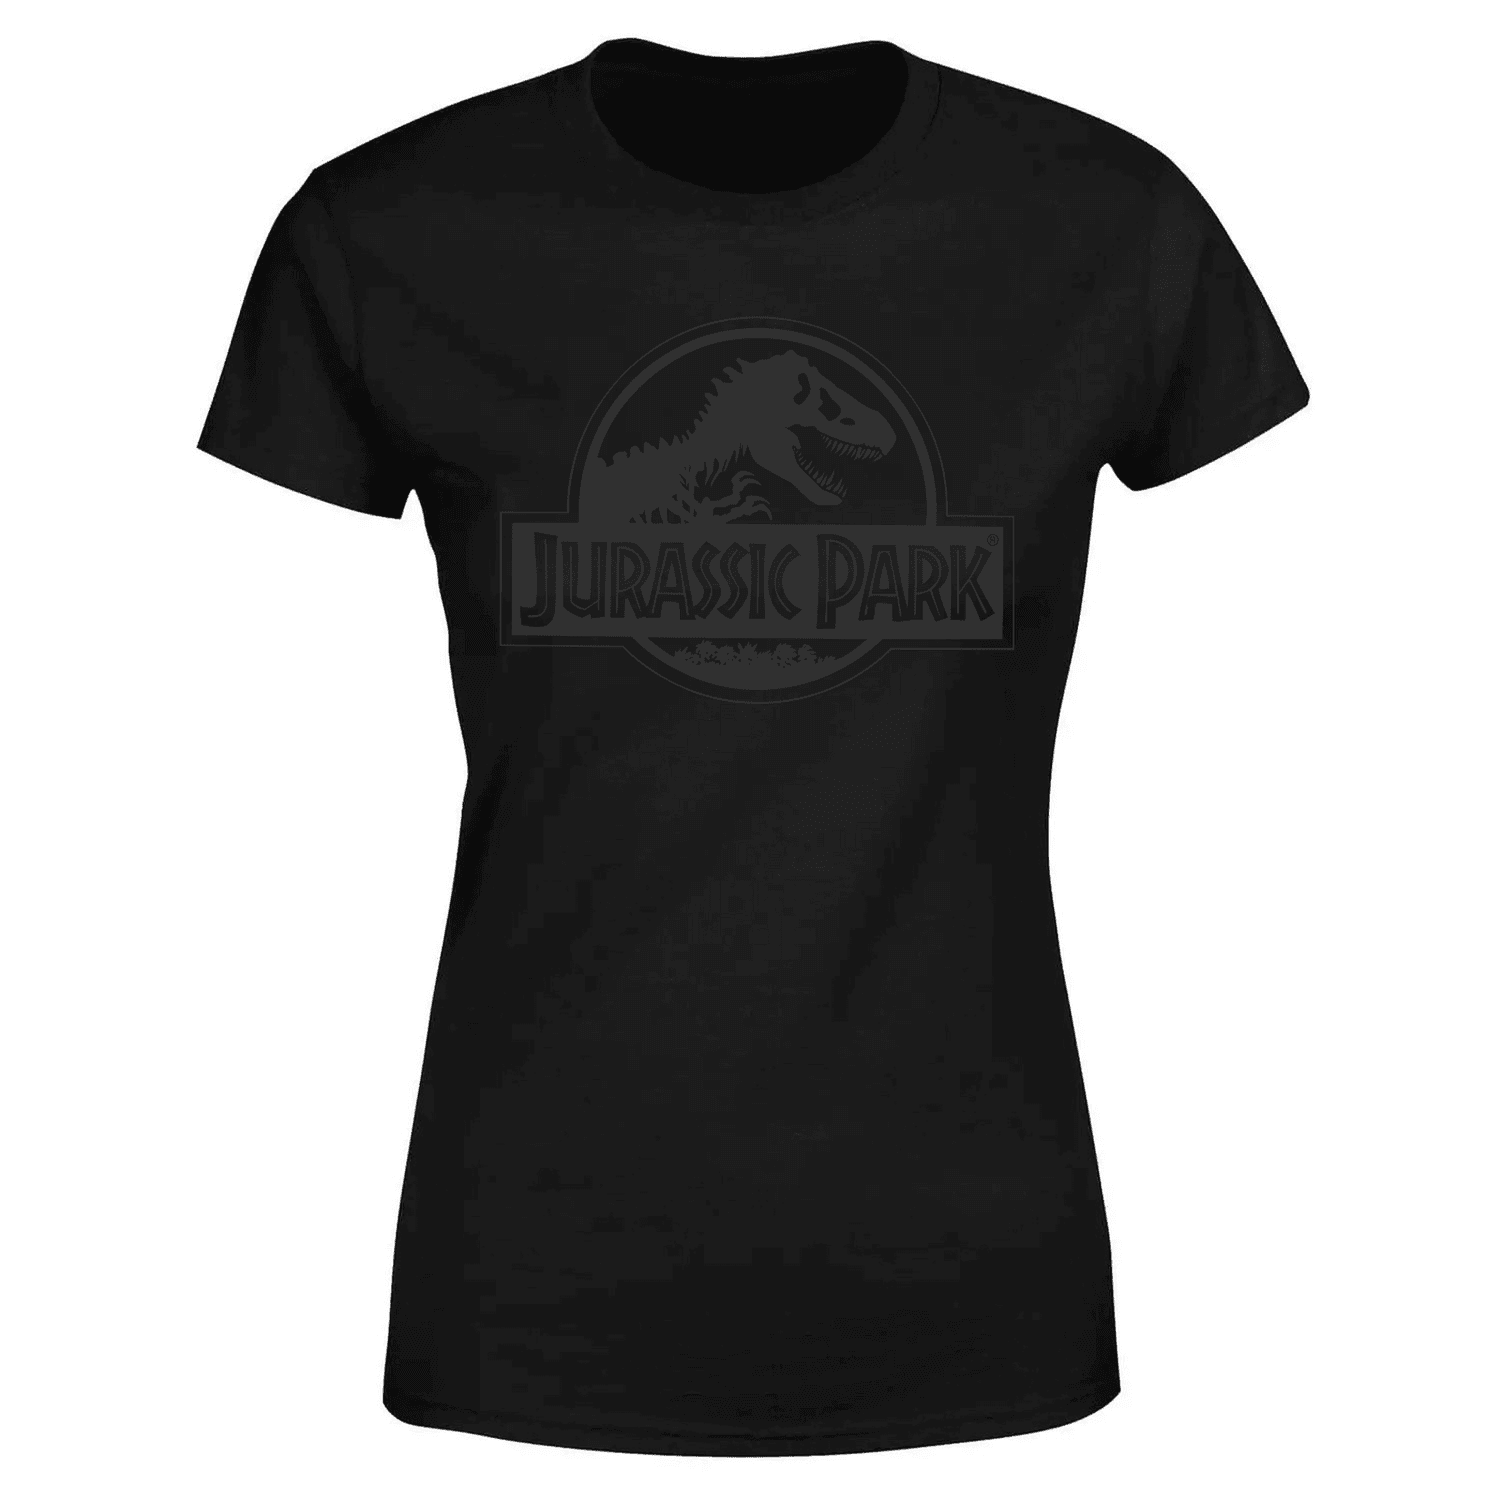 Jurassic Park Monochrome Women's T-Shirt - Black